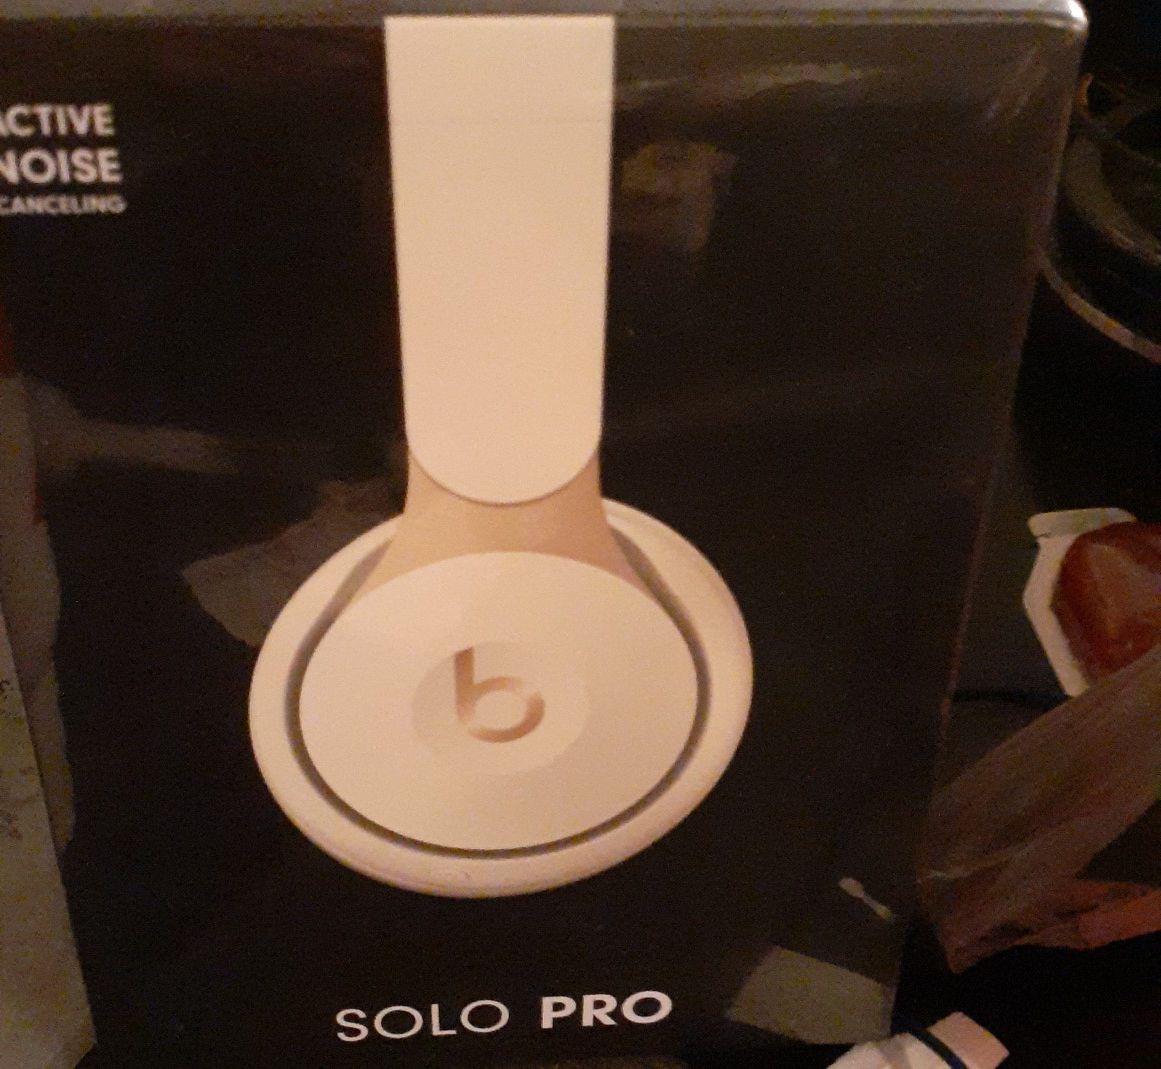 Solo pro beats studio headphones.